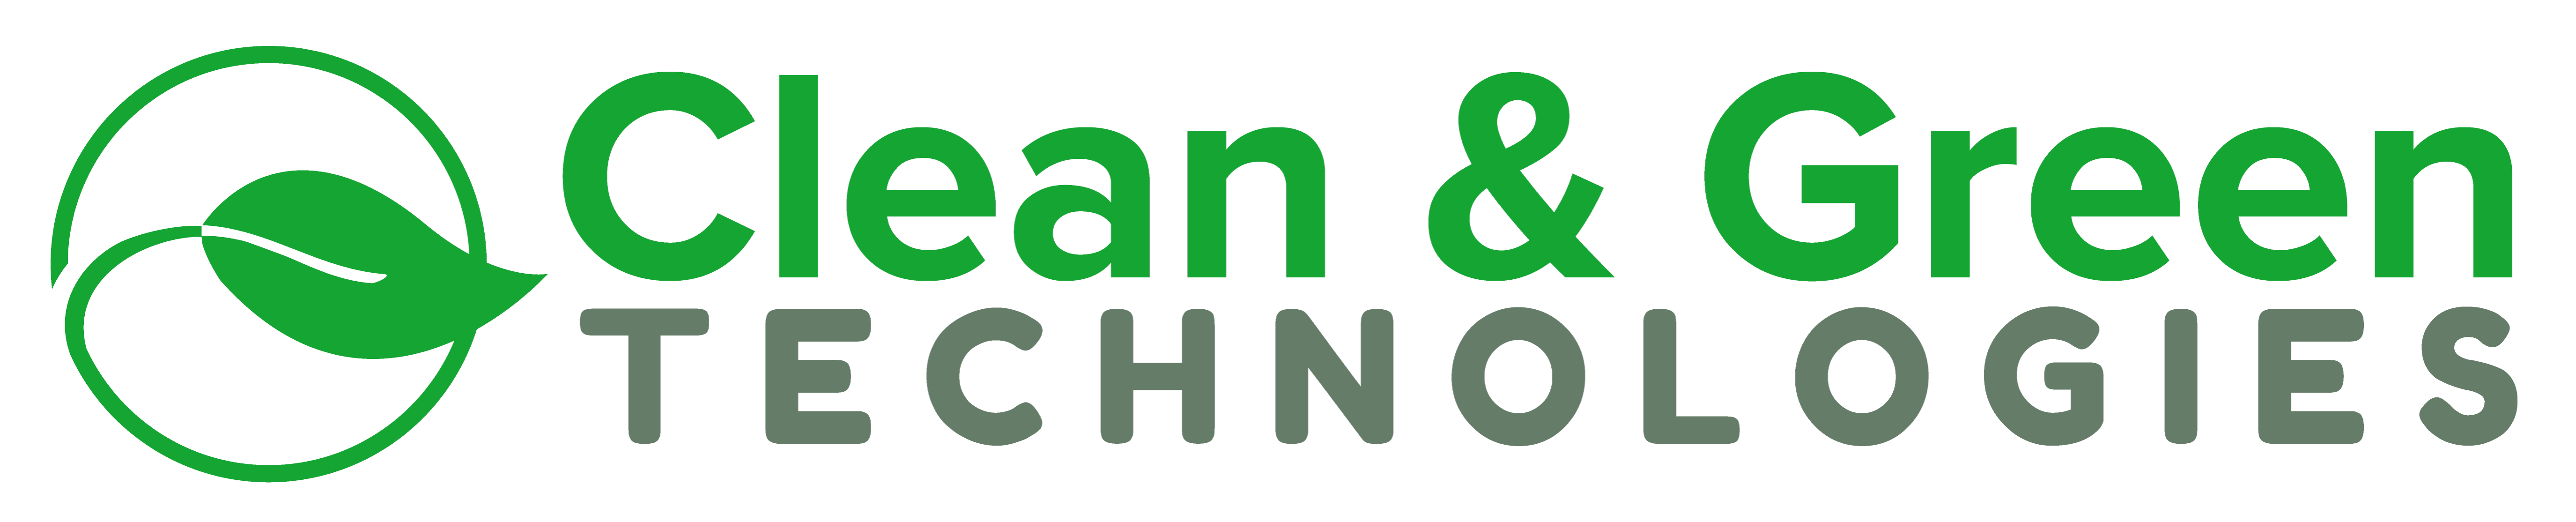 Clean & Green Technologies